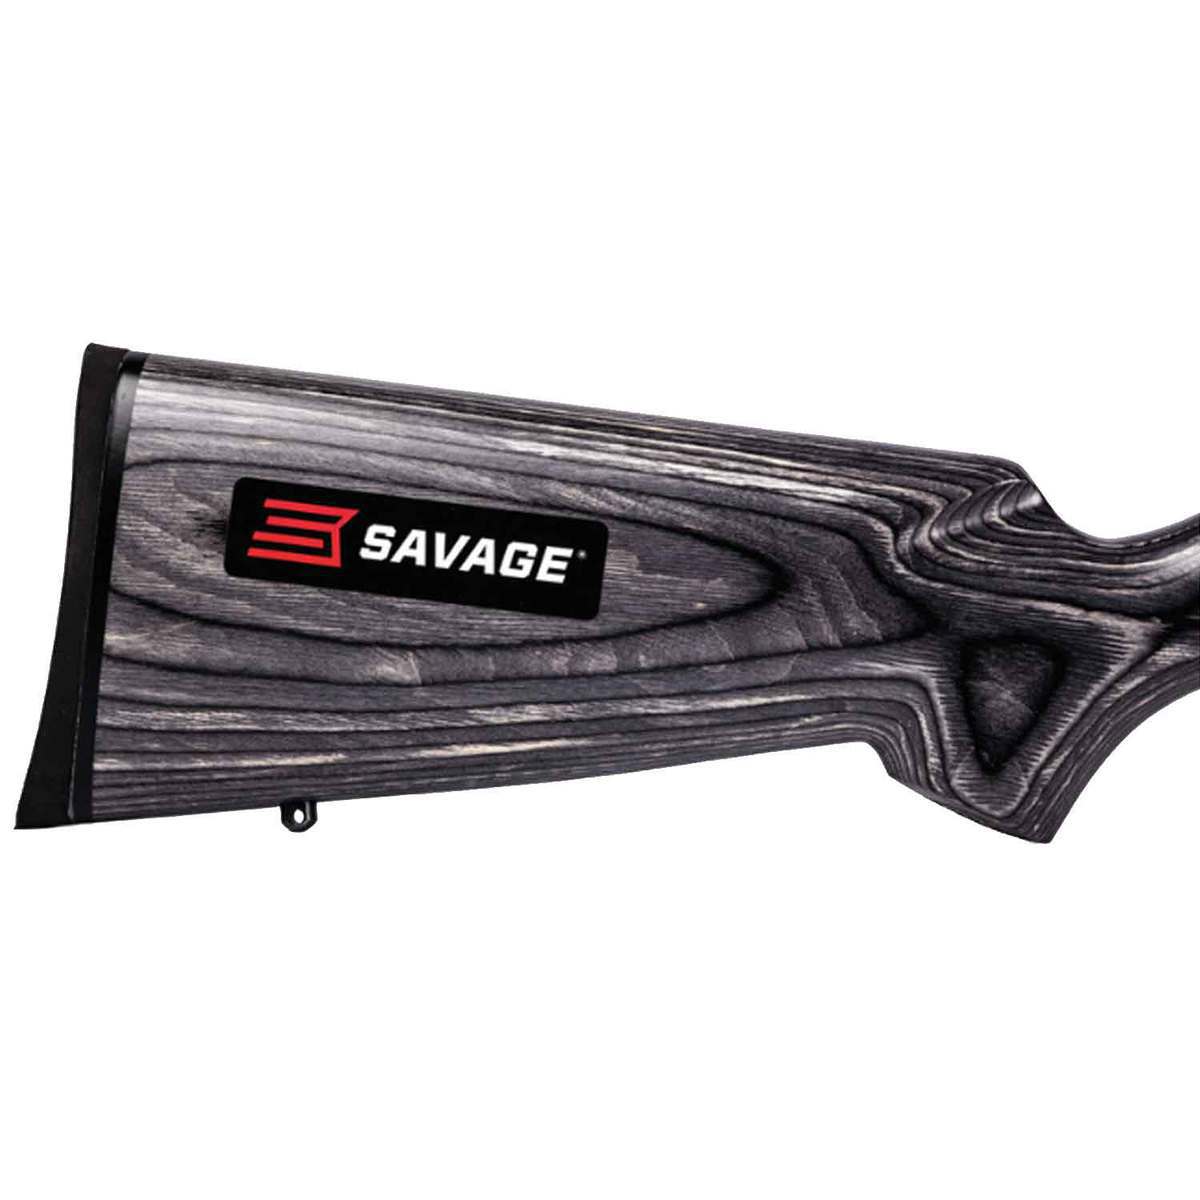 Savage A17 Target Sporter Black Semi Automatic Rifle 17 Hmr Gray